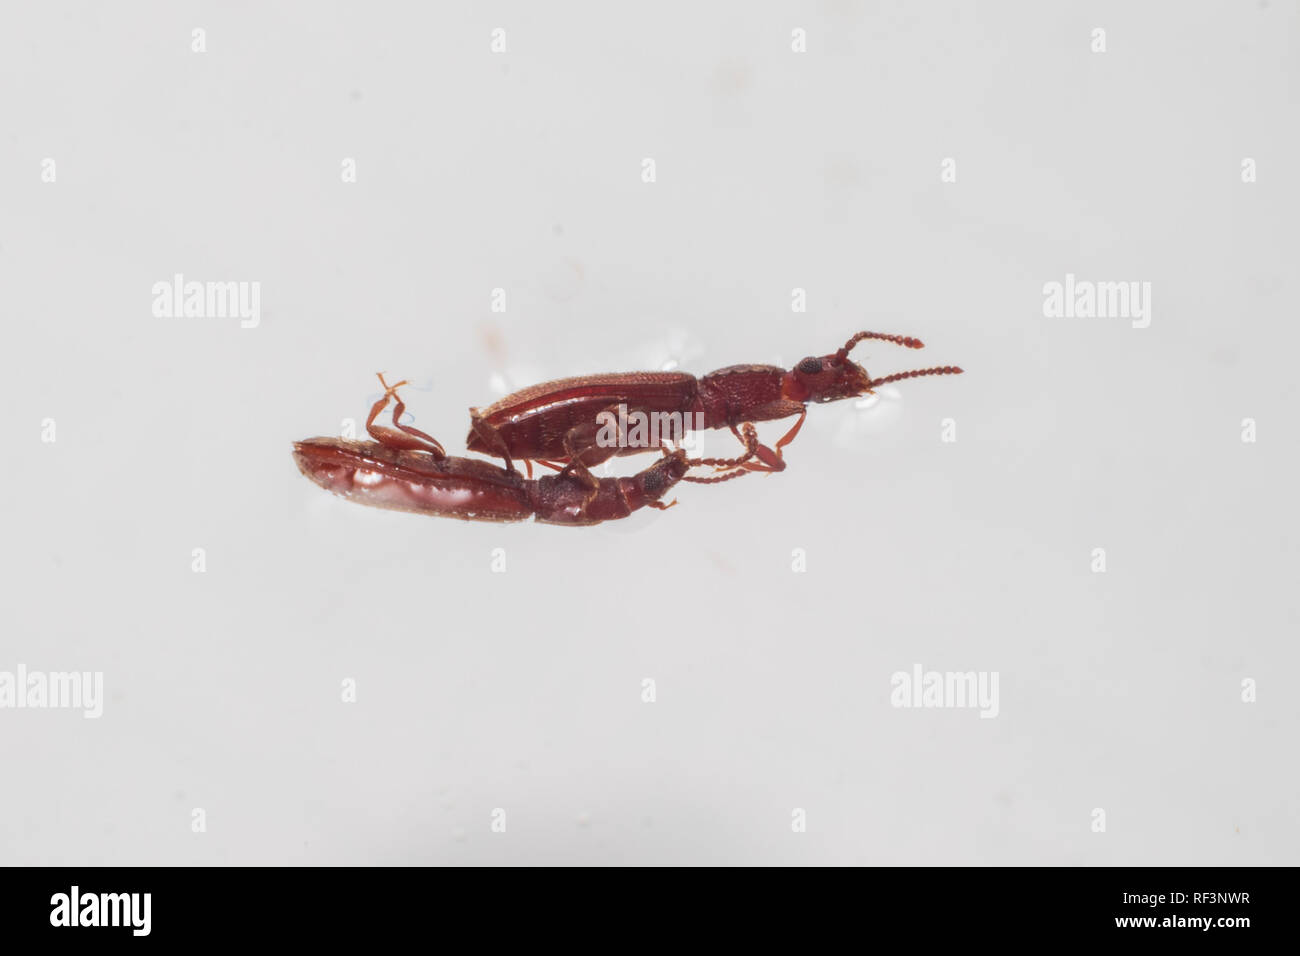 Two merchant grain beetles in white background touching each other. Oryzaephilus mercator Stock Photo